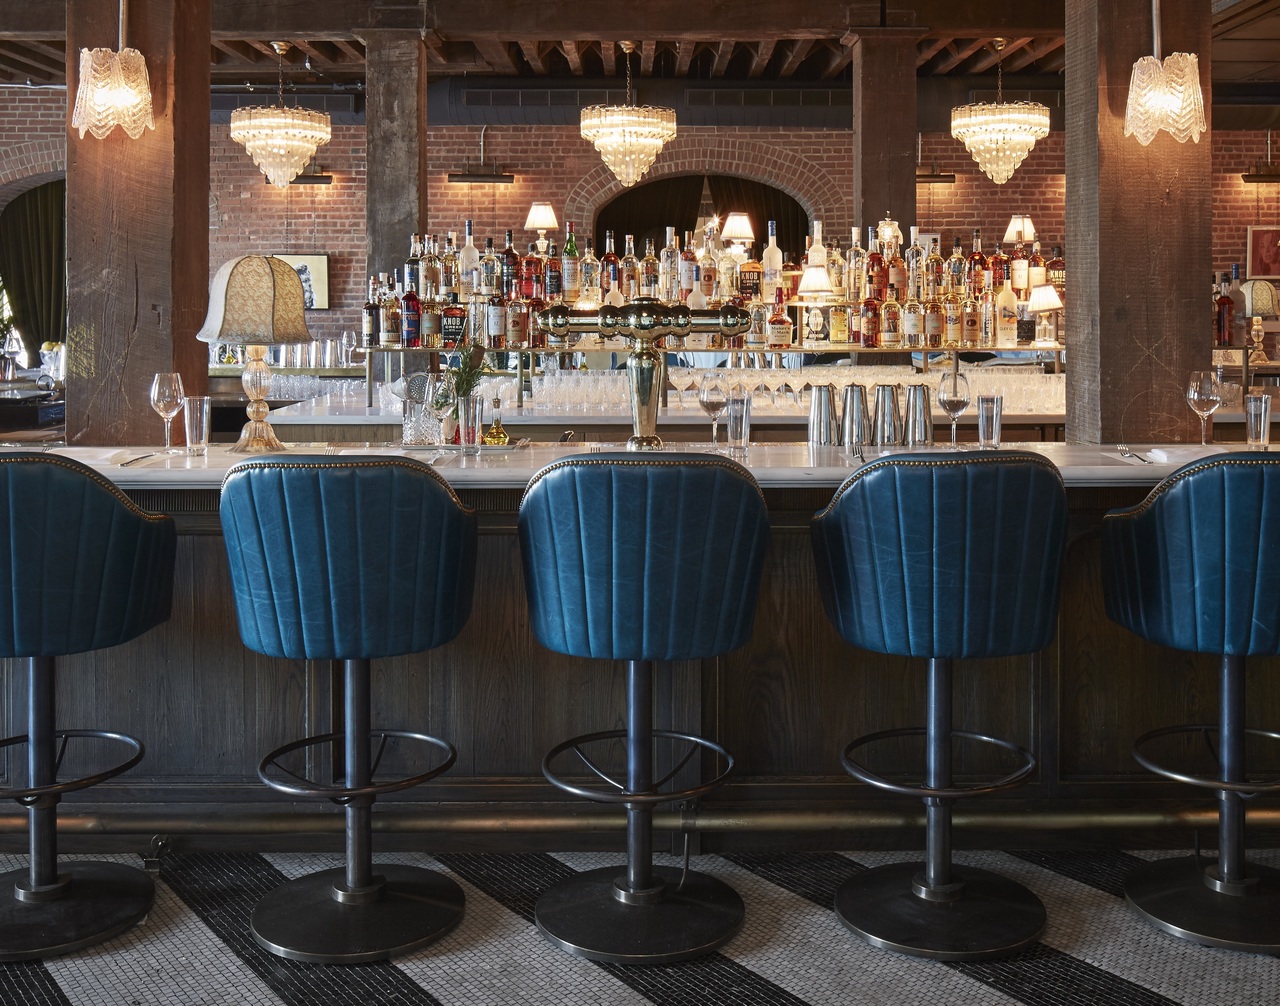 A bar, leather stools and classic Italian furnishings